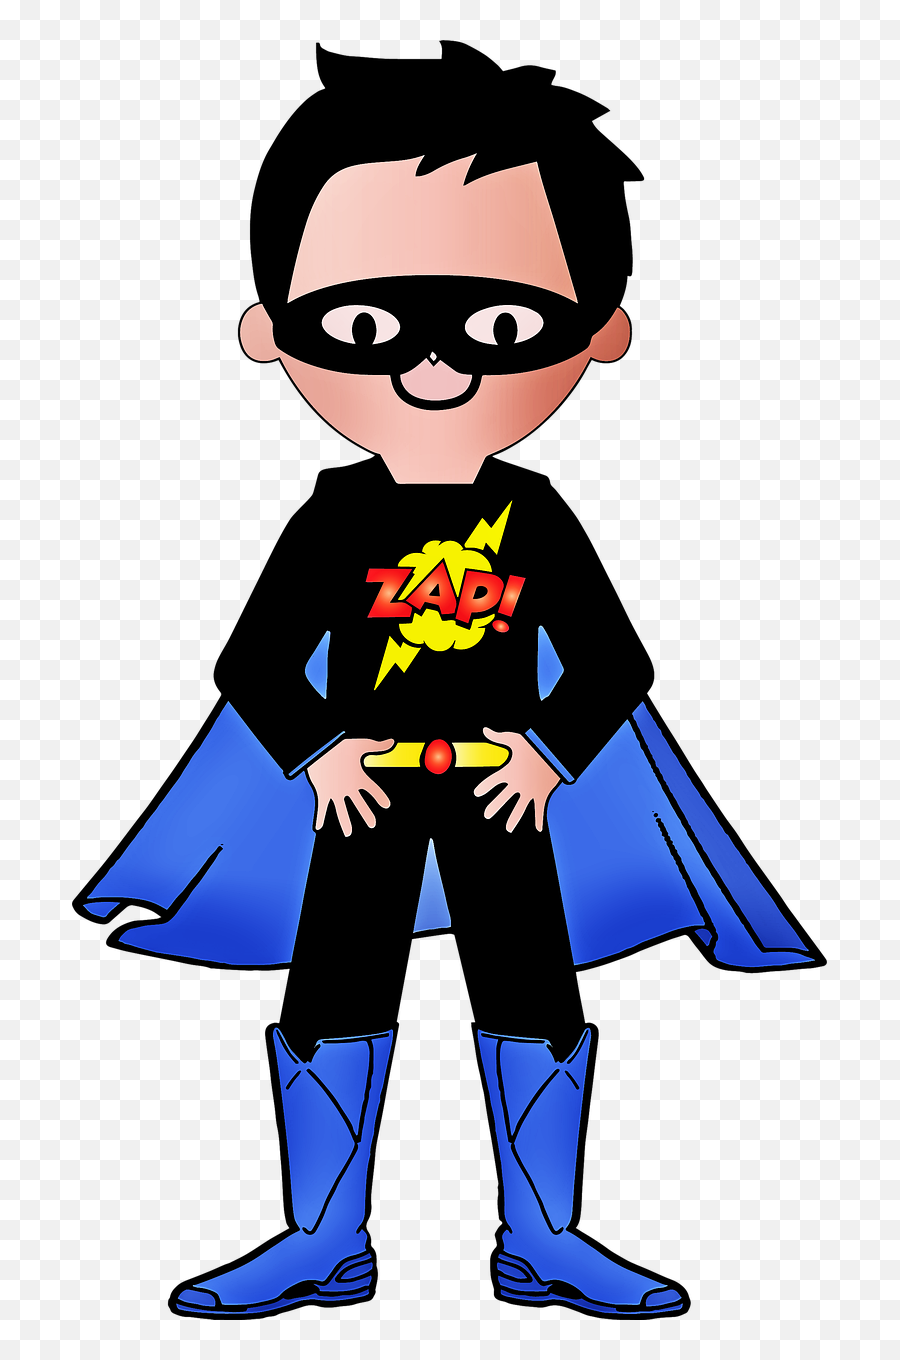 Superhero Boy Zap - Free Image On Pixabay Superhero Png,Superhero Png